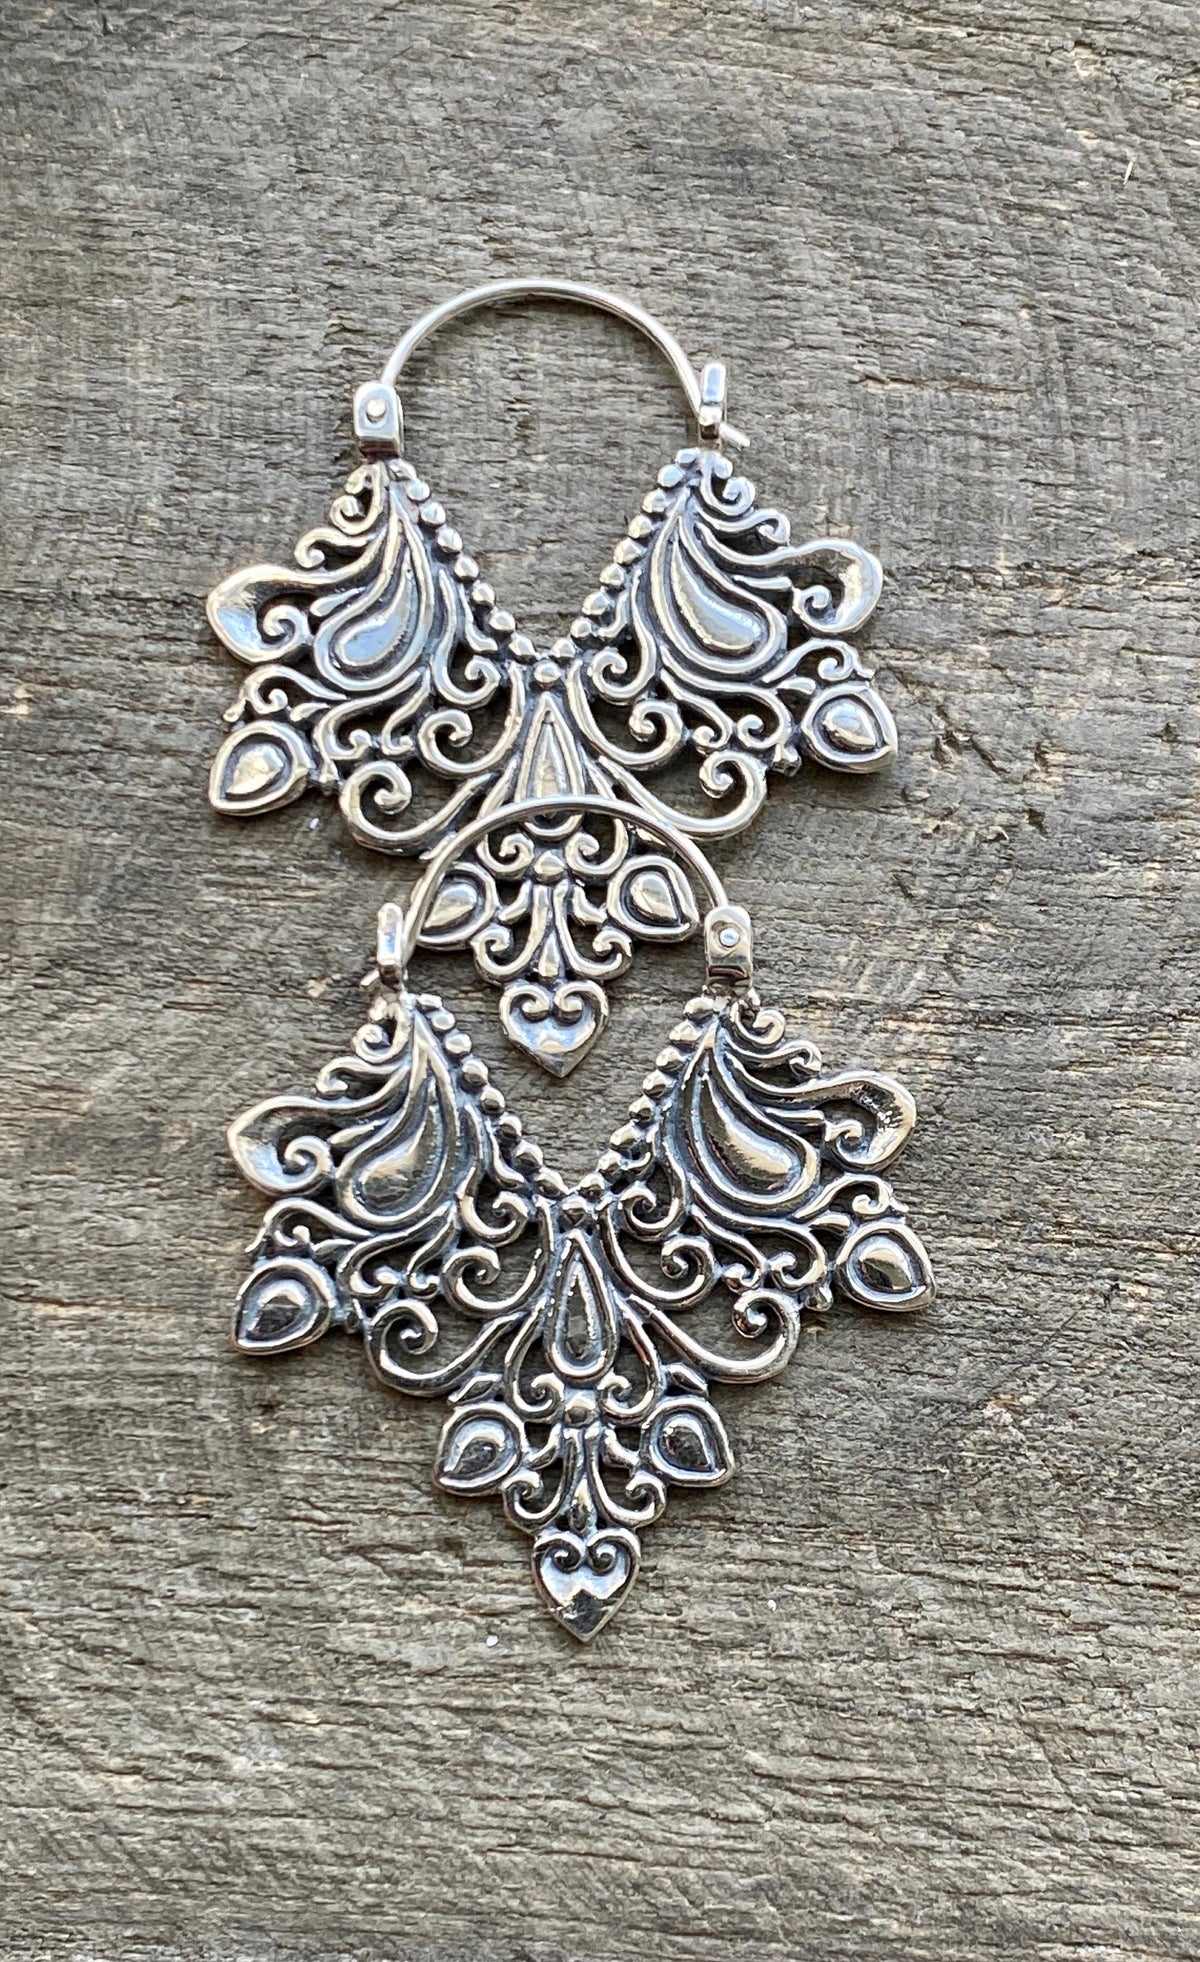 Solid Silver 925 Boho Gypsy Handmade Earrings - Crystal Healing Meditation